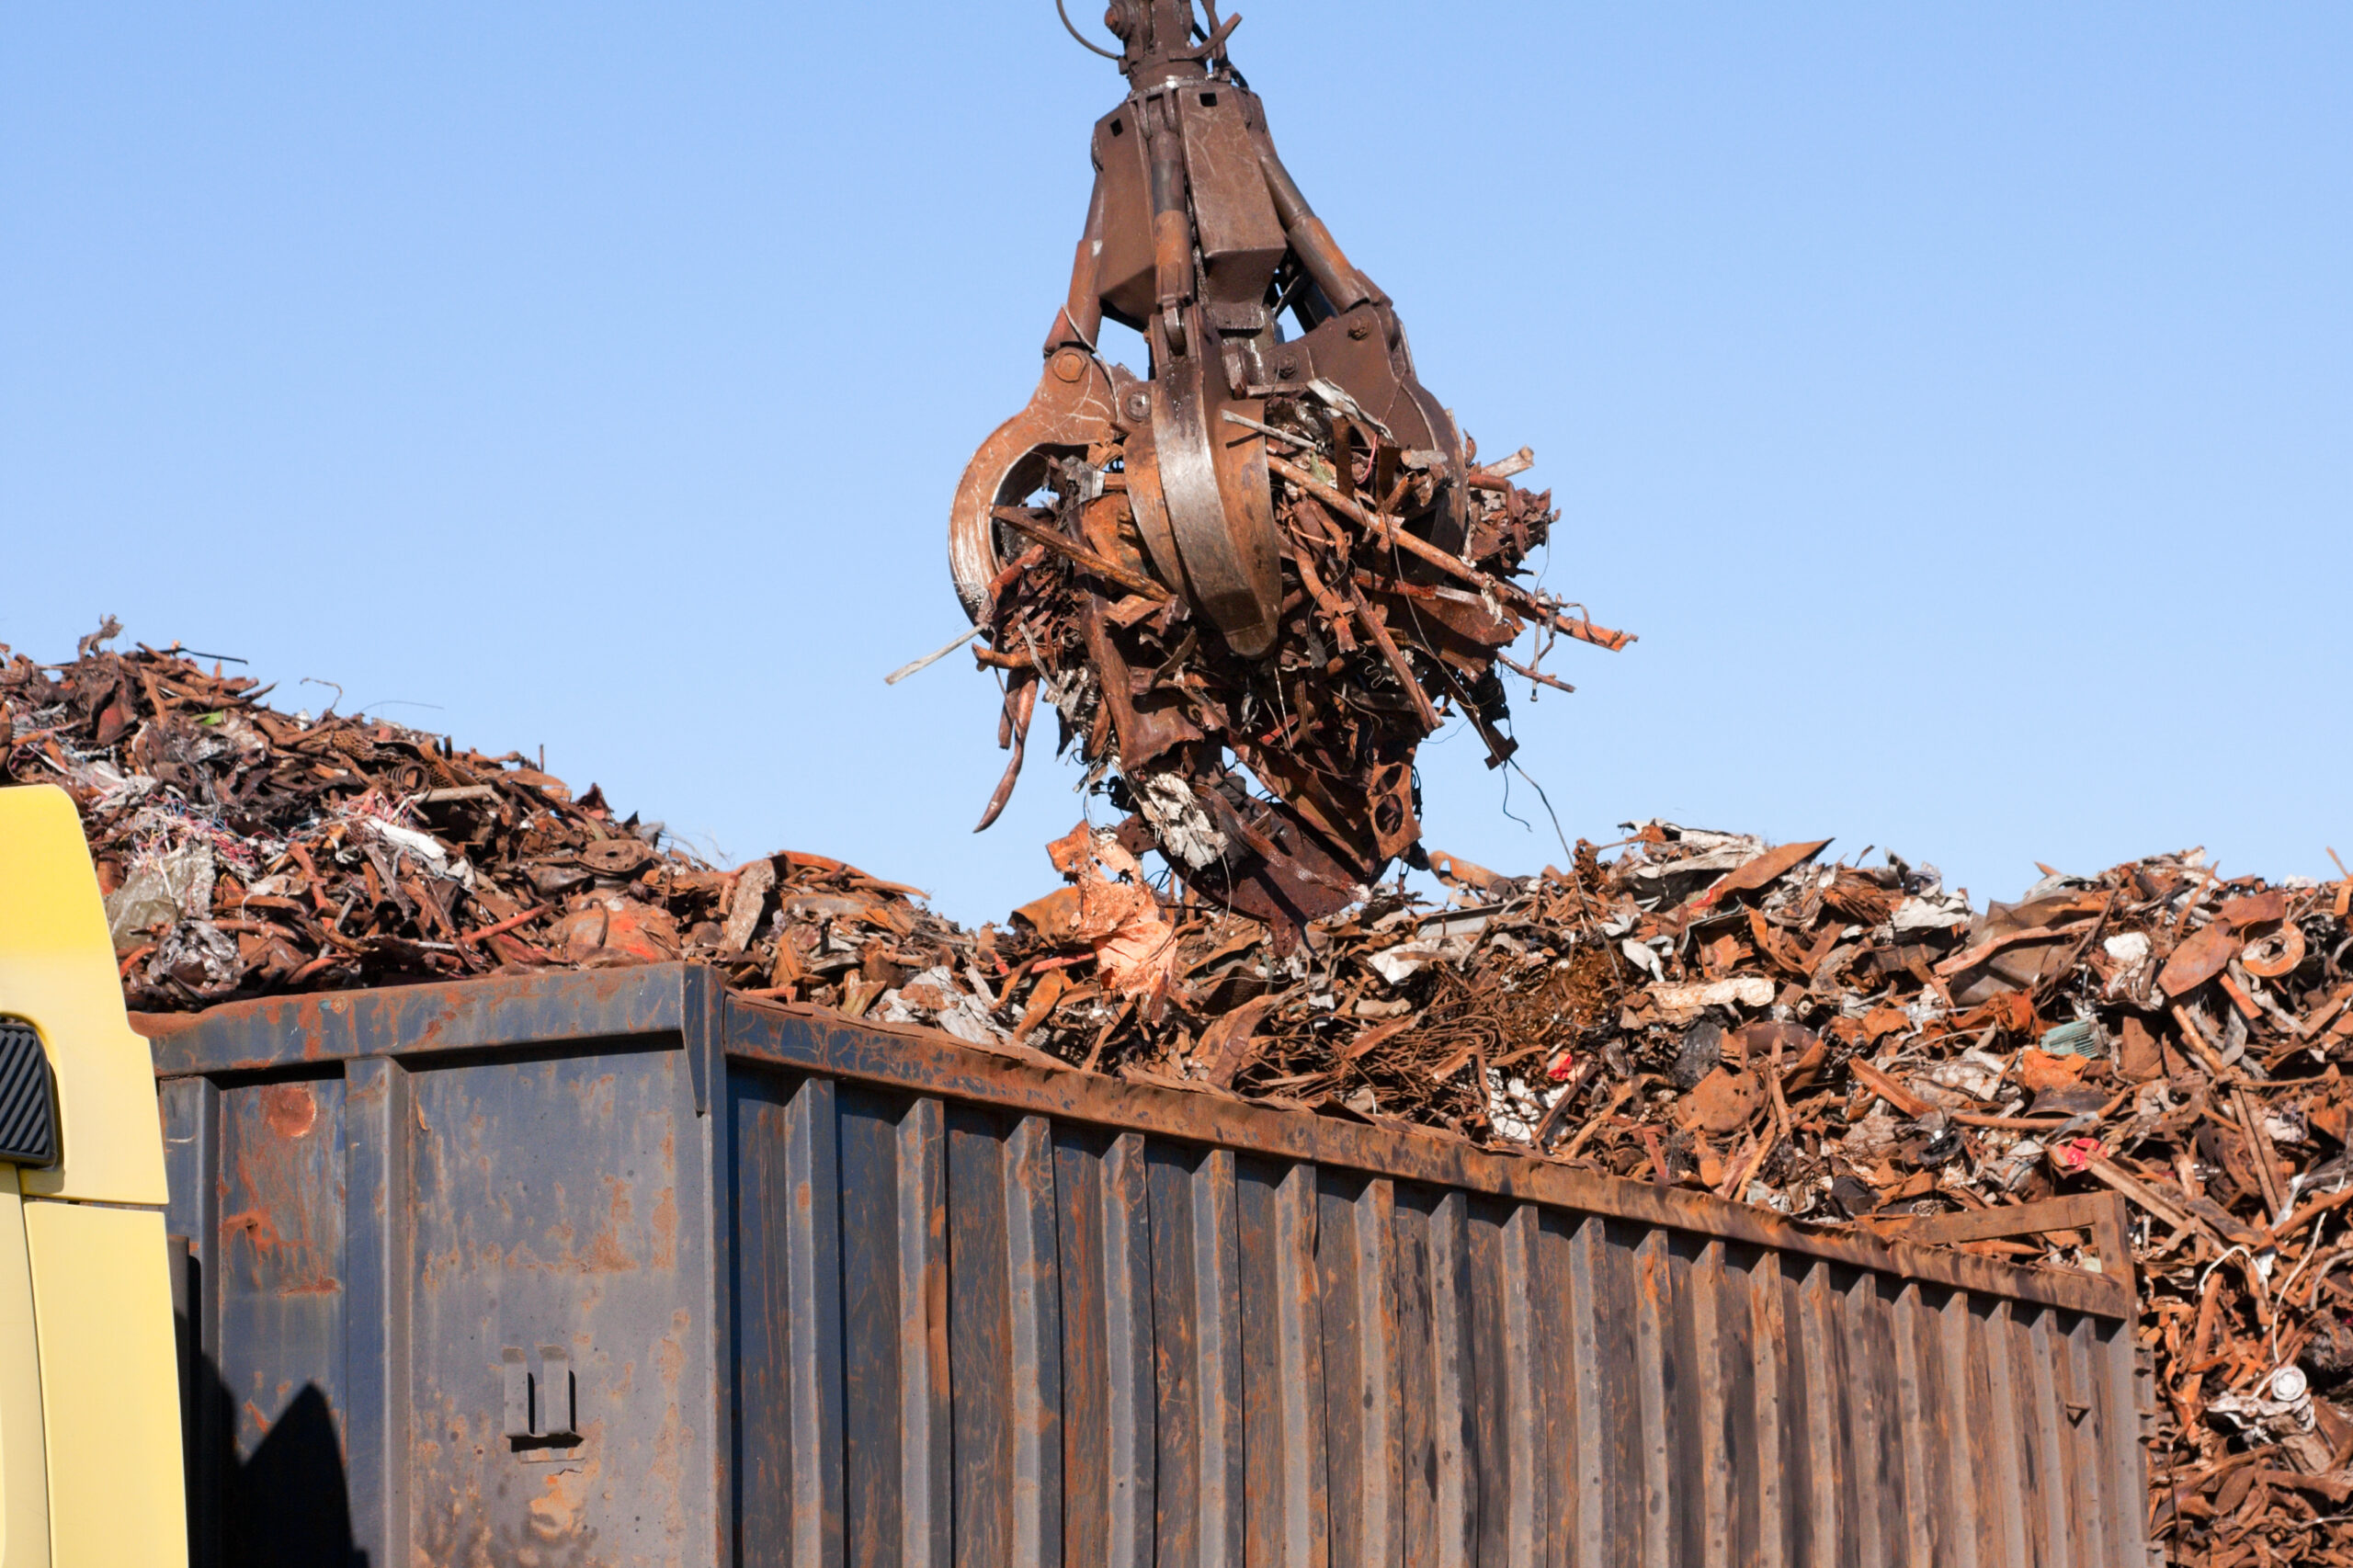 Crane grabber loading industrial scrap metal